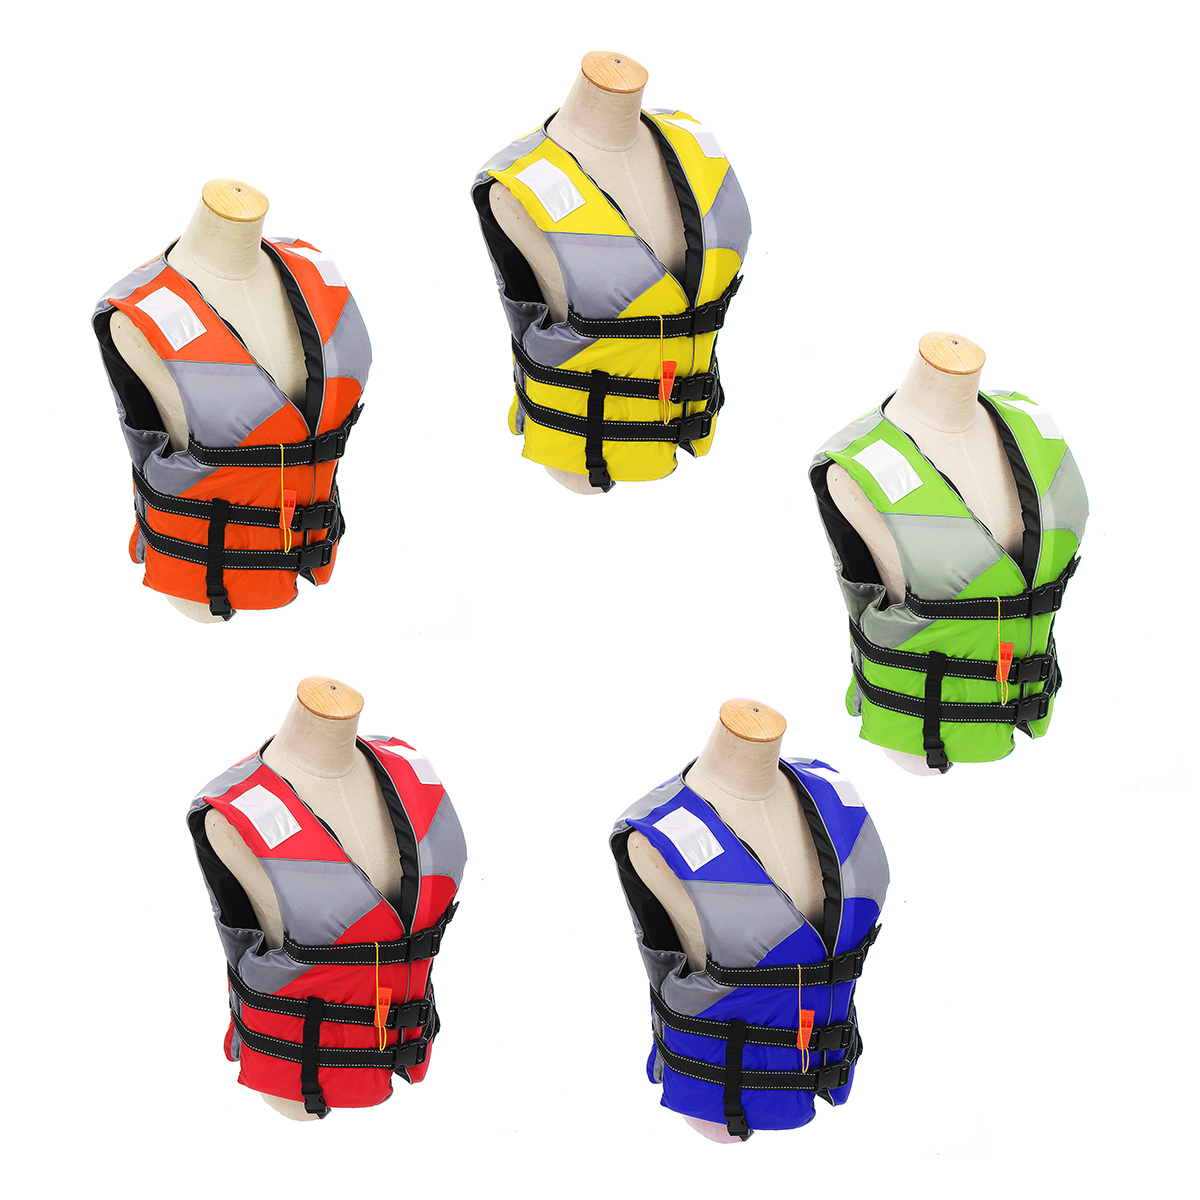 Reflective-Adult-Life-Jacket-Vest-Professional-Fully-Enclosed-Water-Sports-Safty-Aid-Swimwear-Fishin-1640049-4